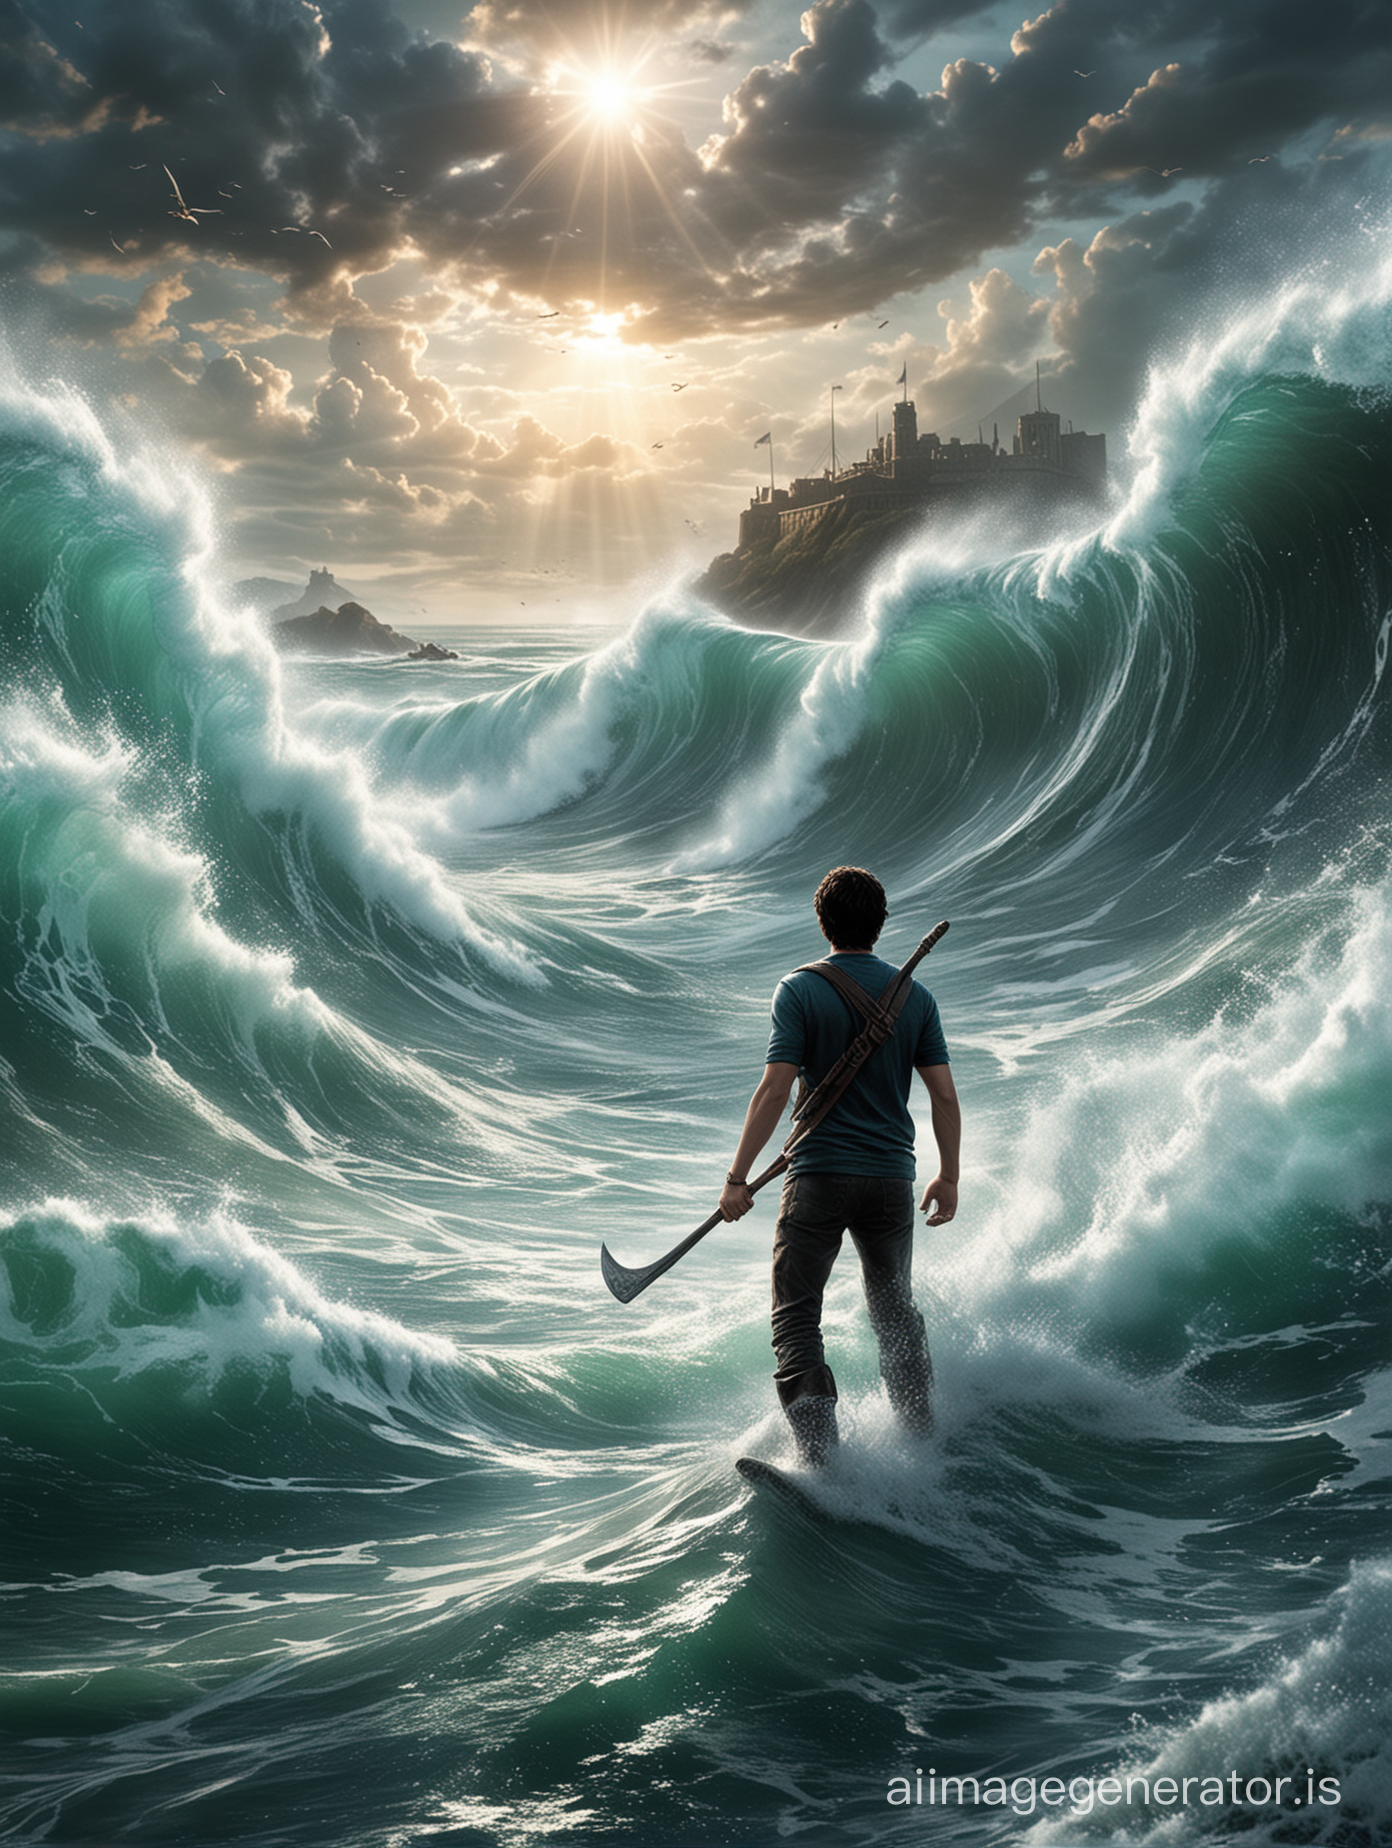 Percy Jackson, Epic battlefield, huge wave of water behind him.